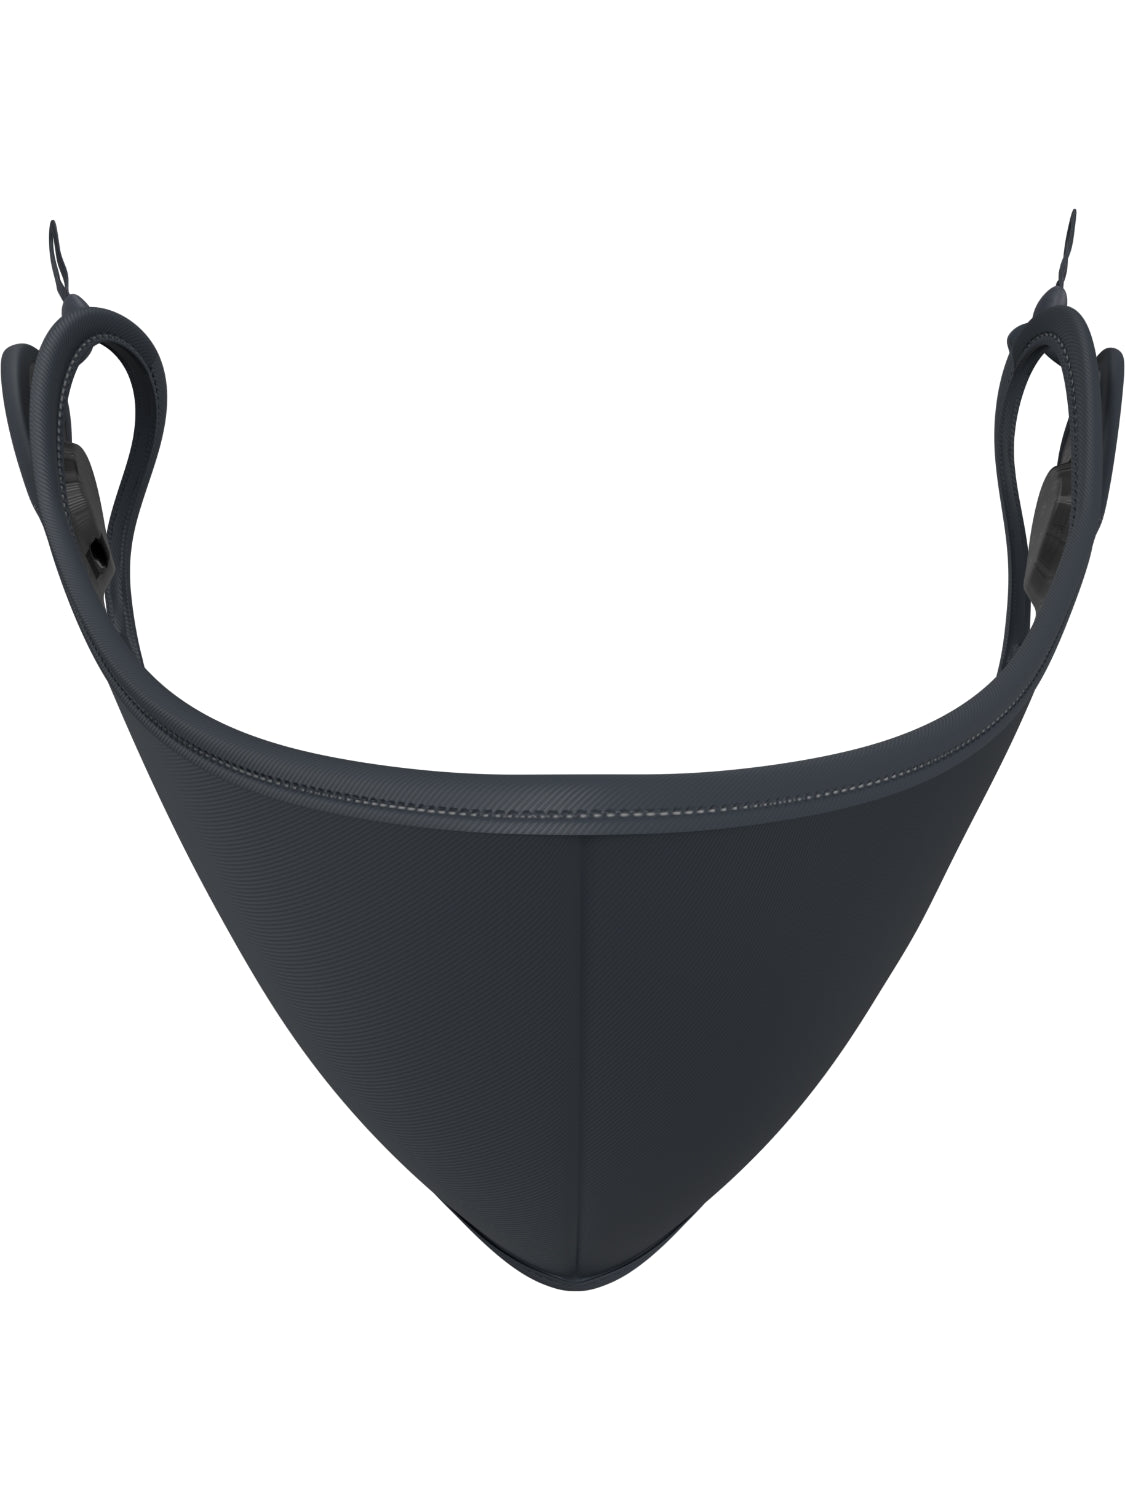 ARIEL Bluetooth waterproof sports mask